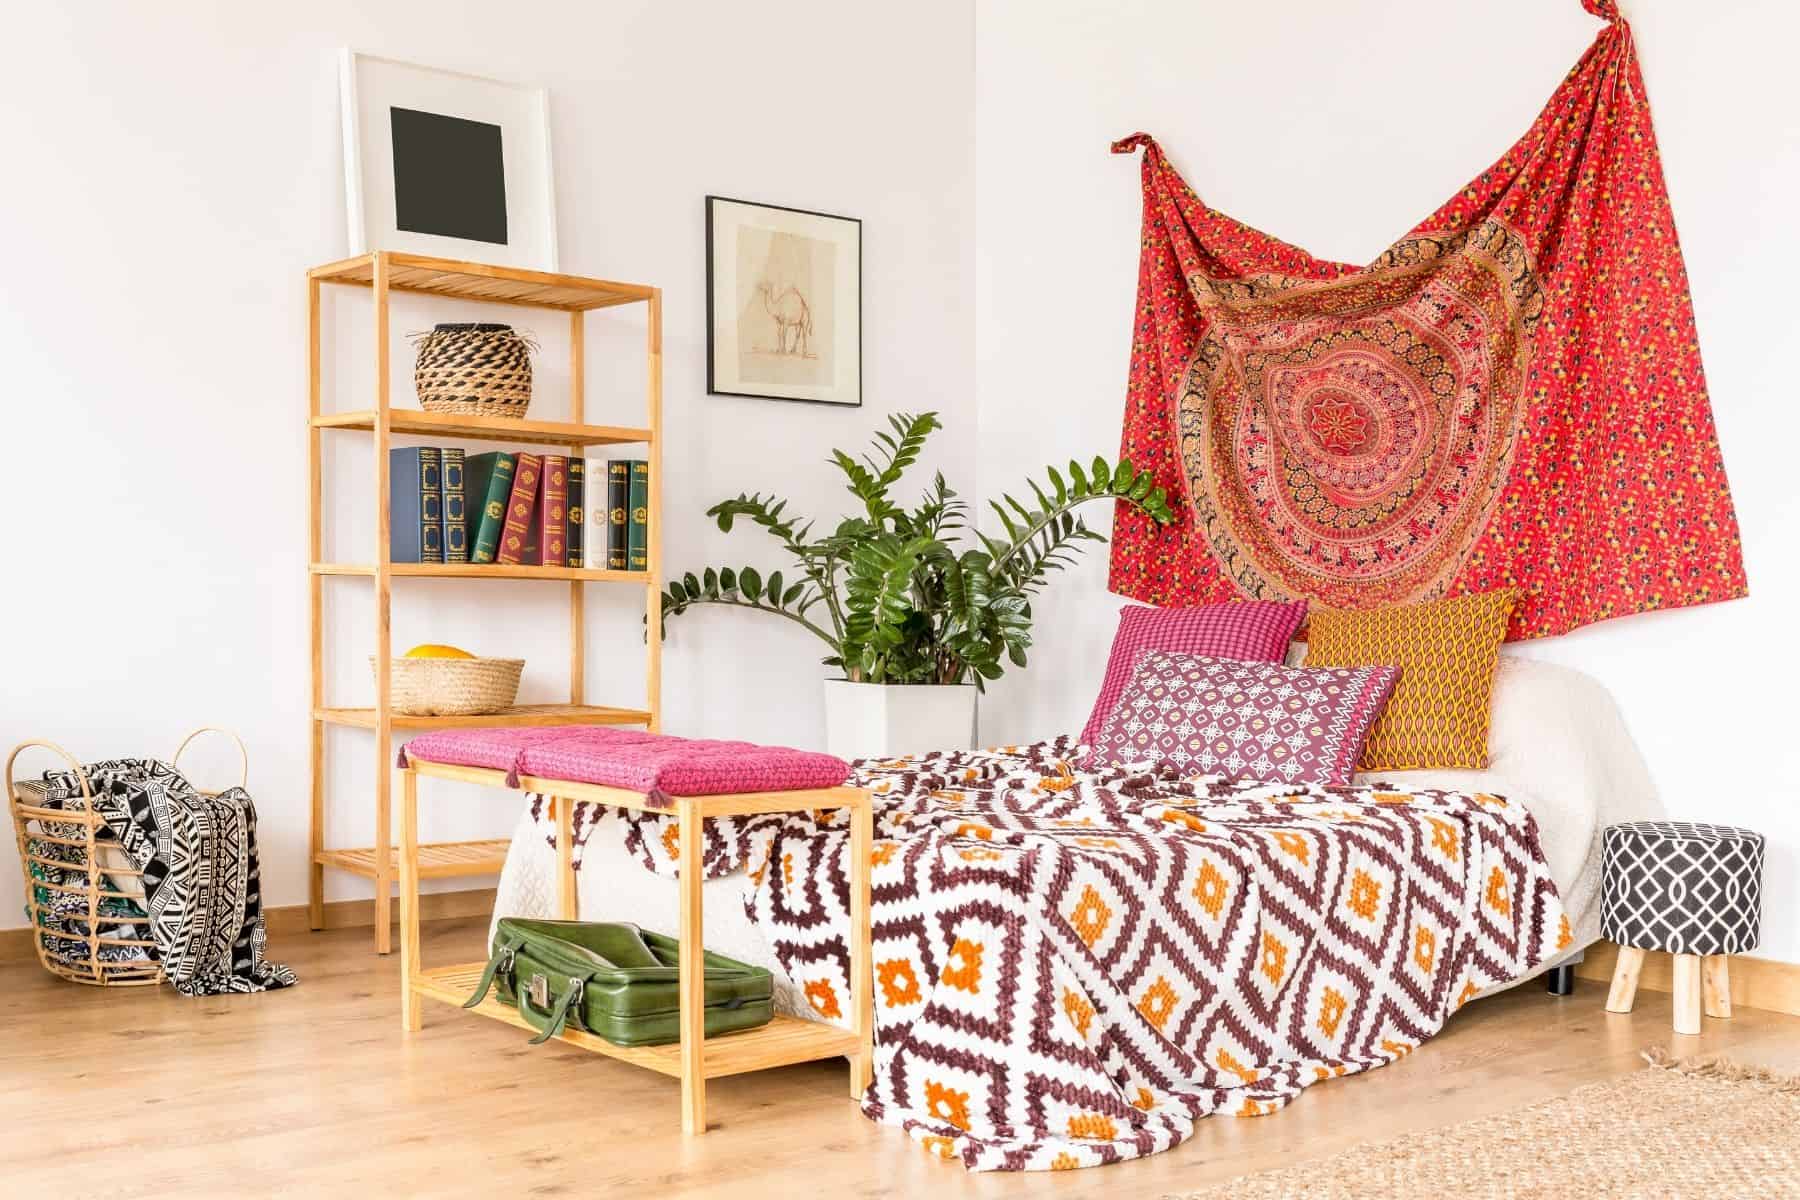 Boho style textiles in bedroom.